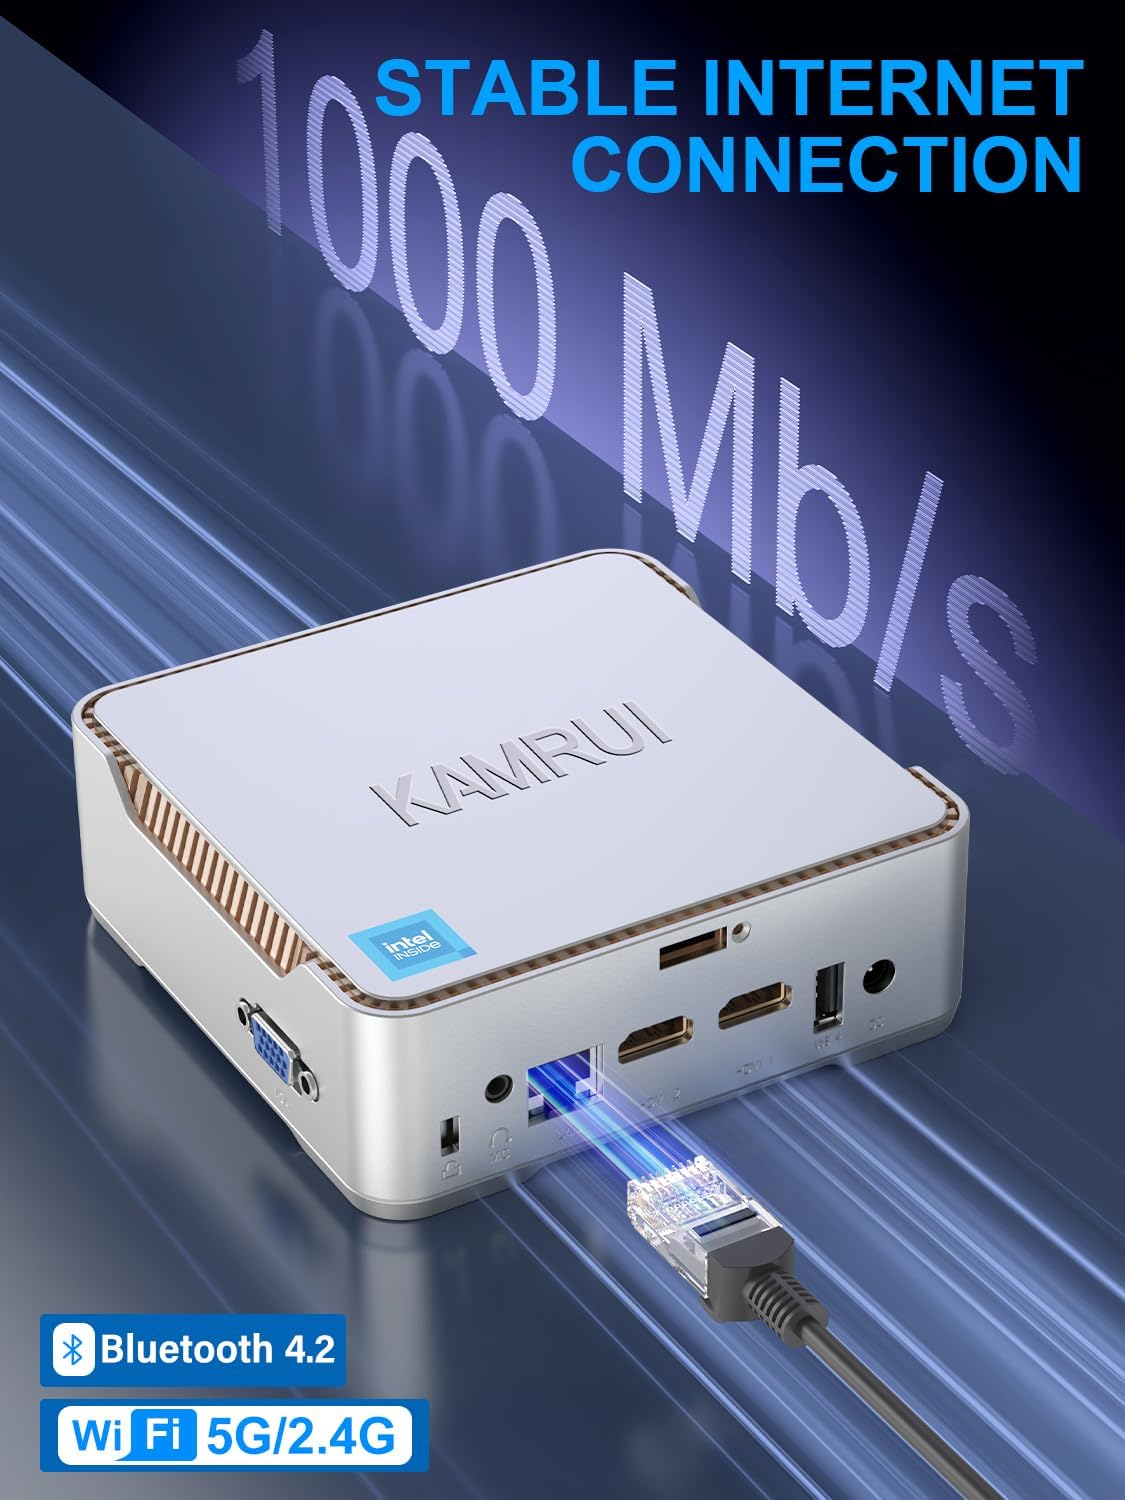 KAMRUI GK3 Plus Mini PC,12th Intel Alder Lake- N95 (up to 3.4GHz) 16GB RAM 1TB M.2 SSD Mini Desktop PC, Gigabit Ethernet, 4K UHD, Dual Wi-Fi, BT 4.2 Home/Business Mini Desktop Computer